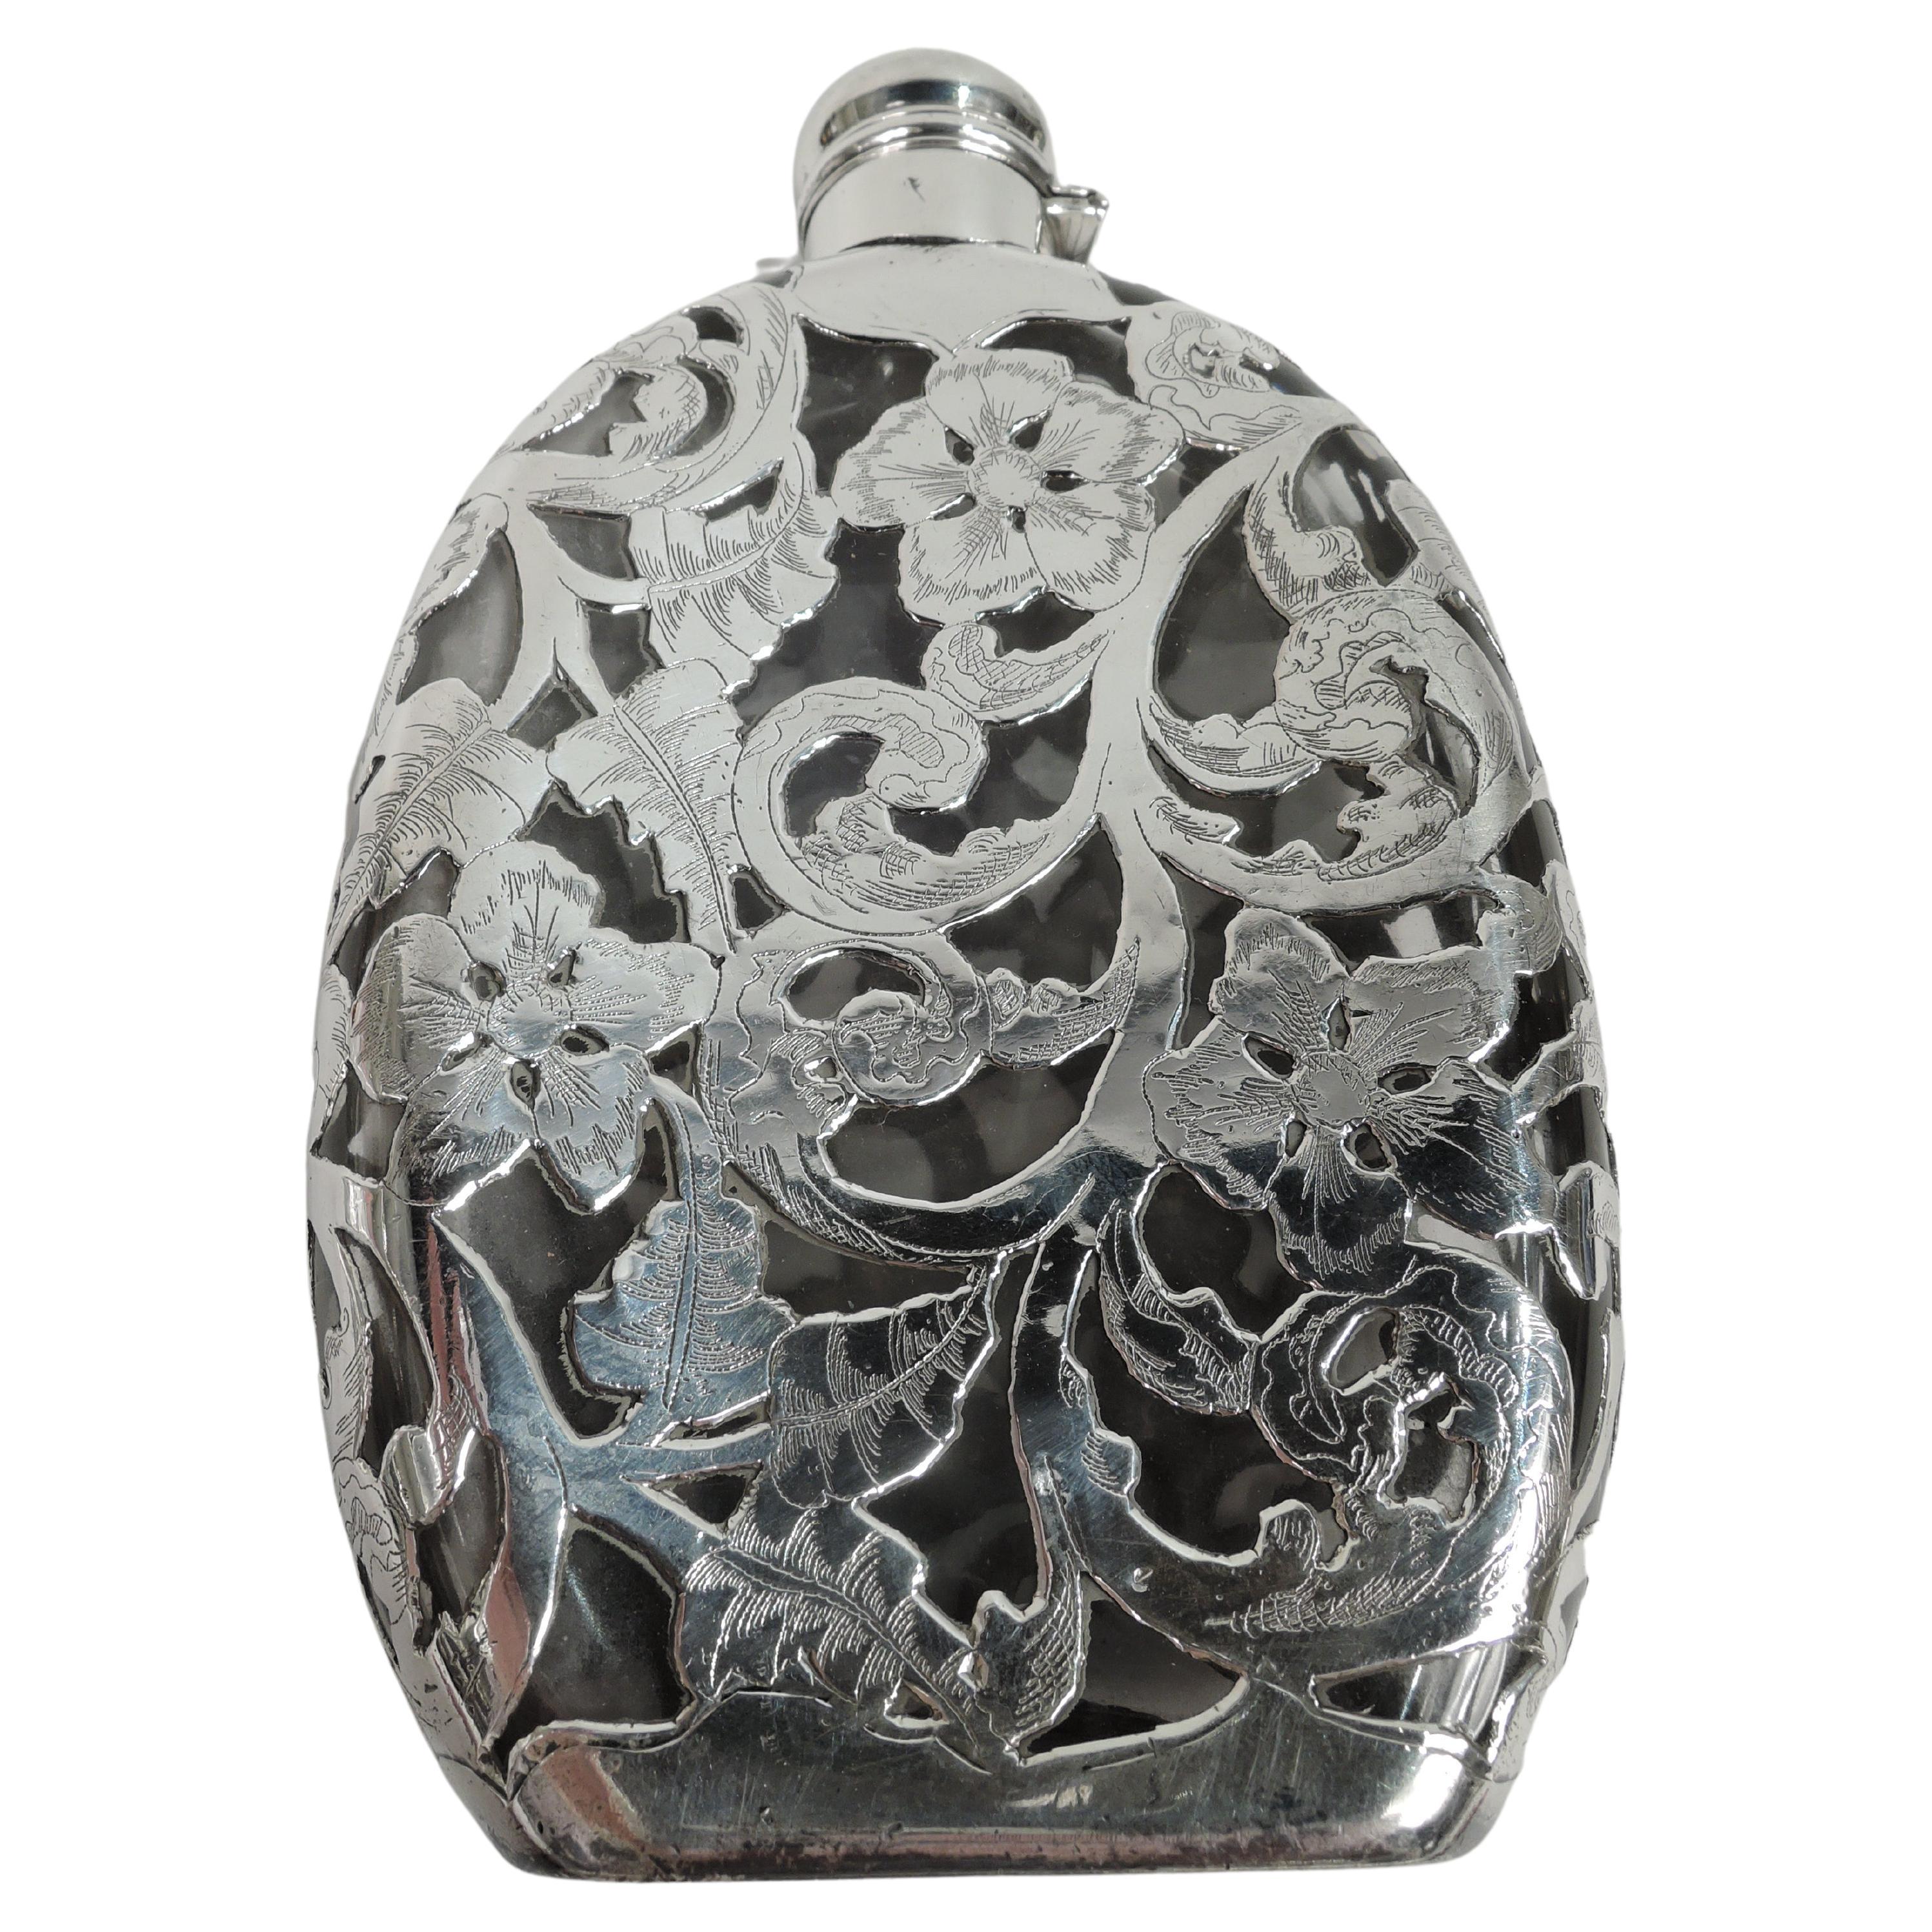 Antique American Art Nouveau Silver Overlay Flask